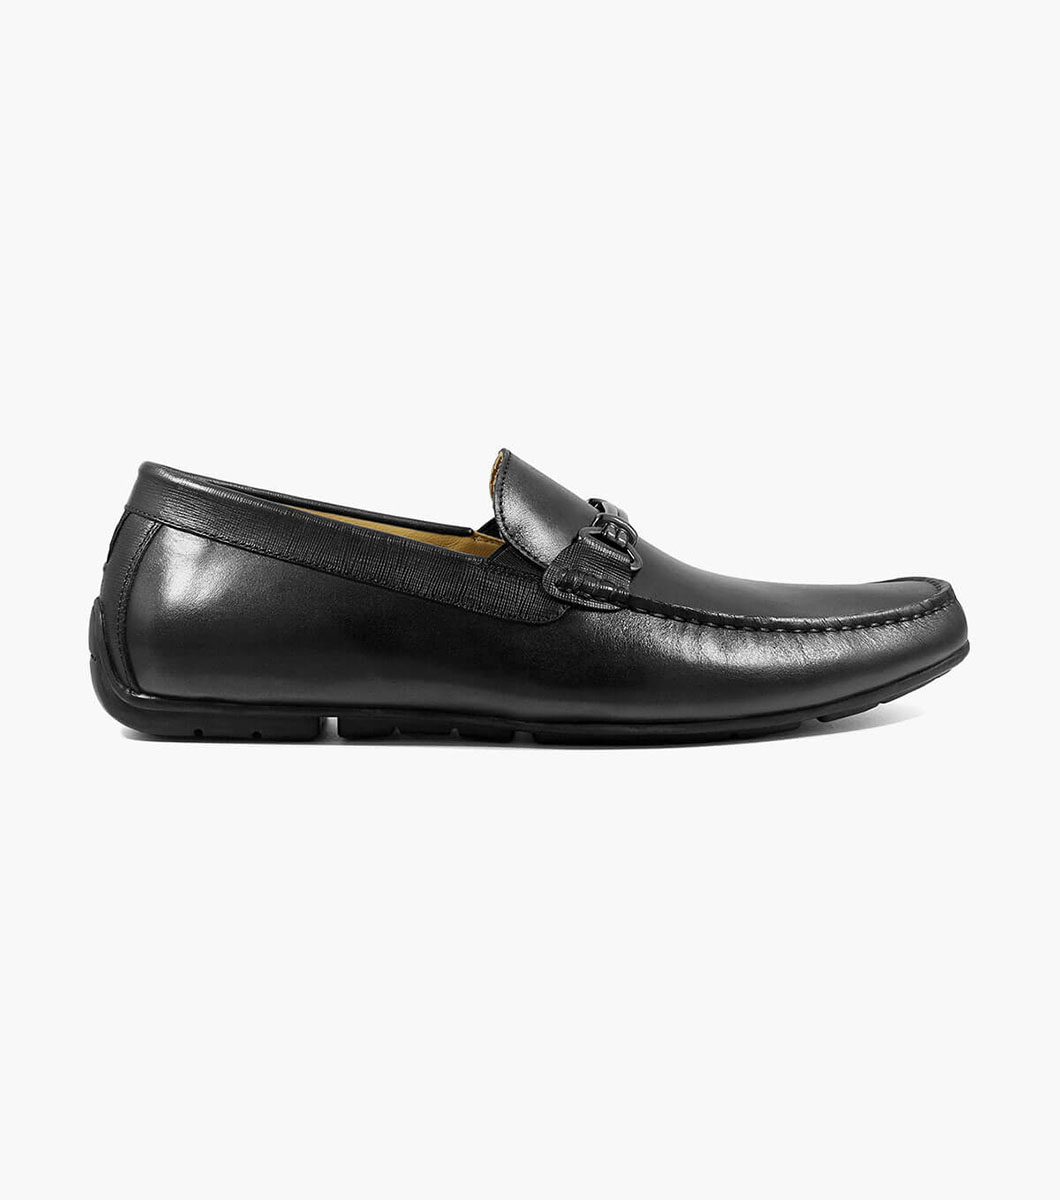 Dubino Moc Toe Bit Loafer Men’s Dress Shoes | Florsheim.com